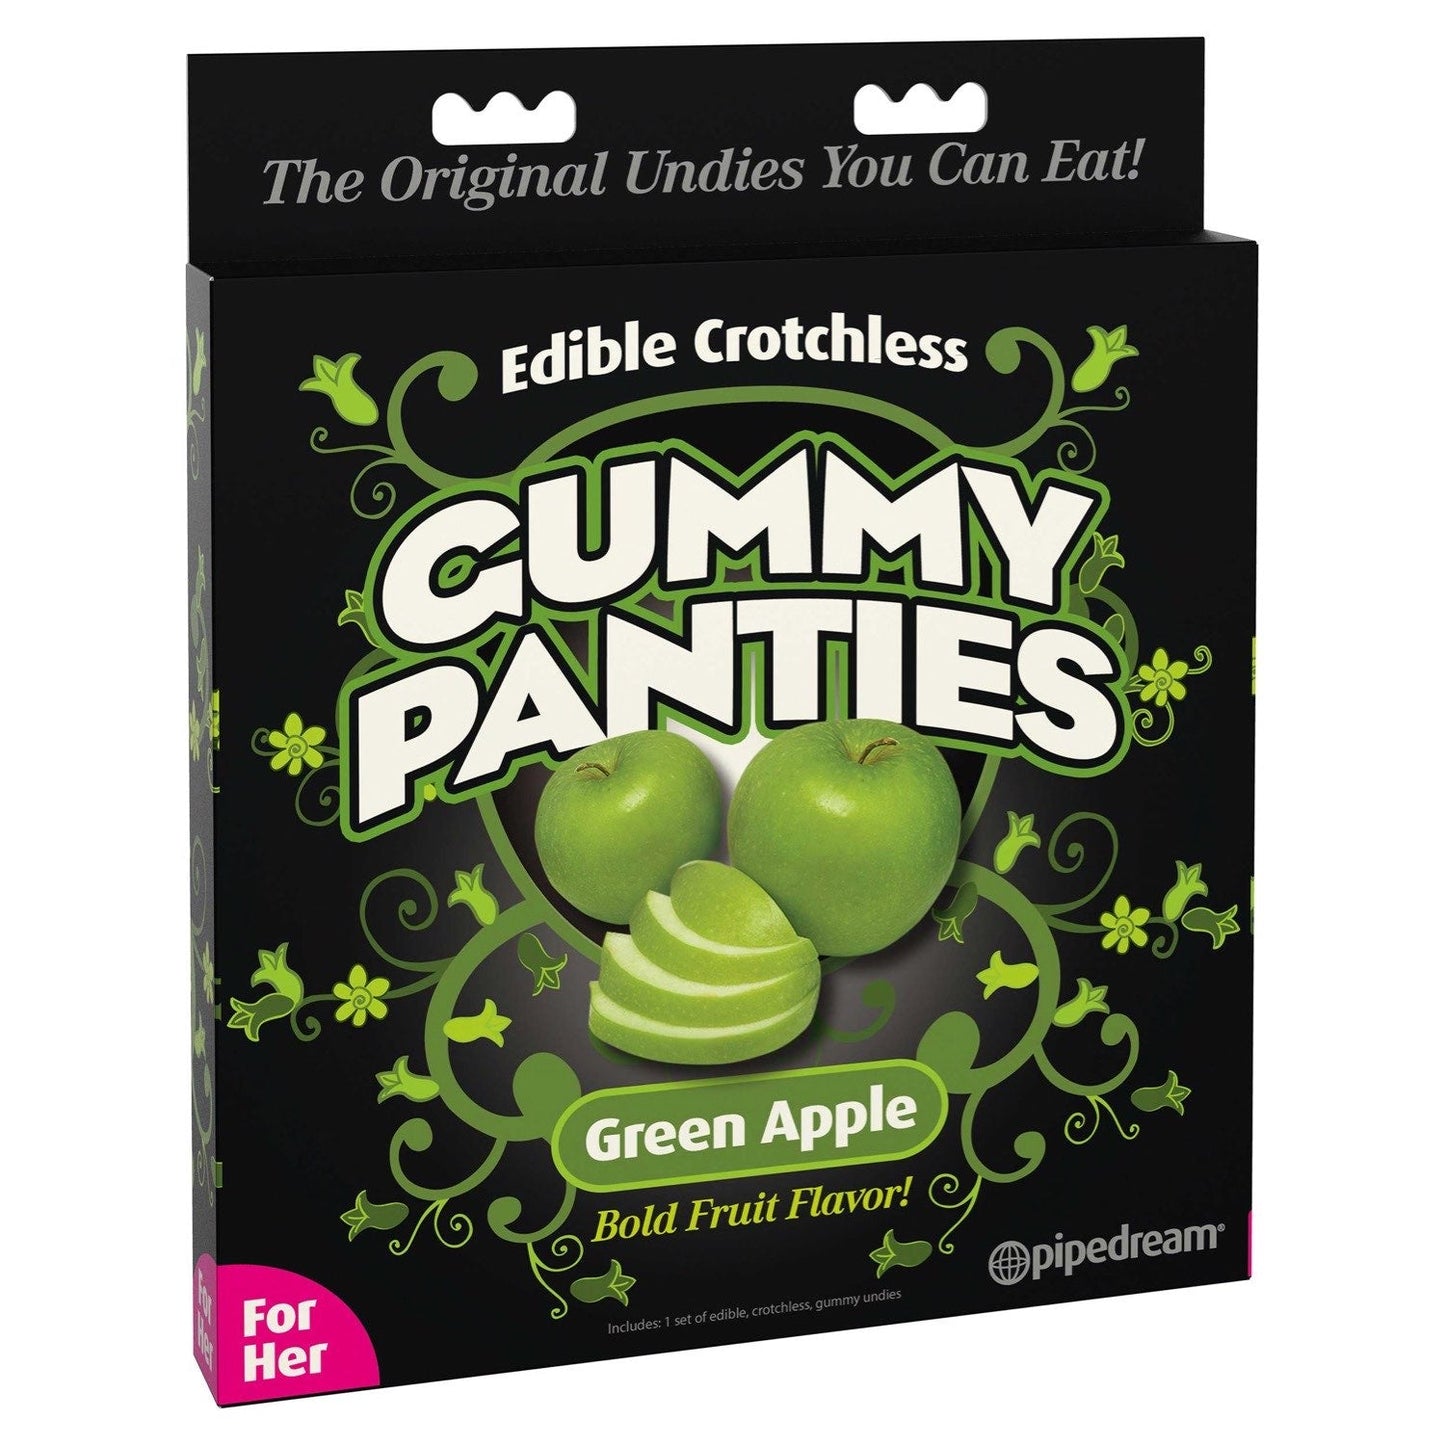 Gummy Panties - Green Apple Flavoured Edible Crotchless Panties